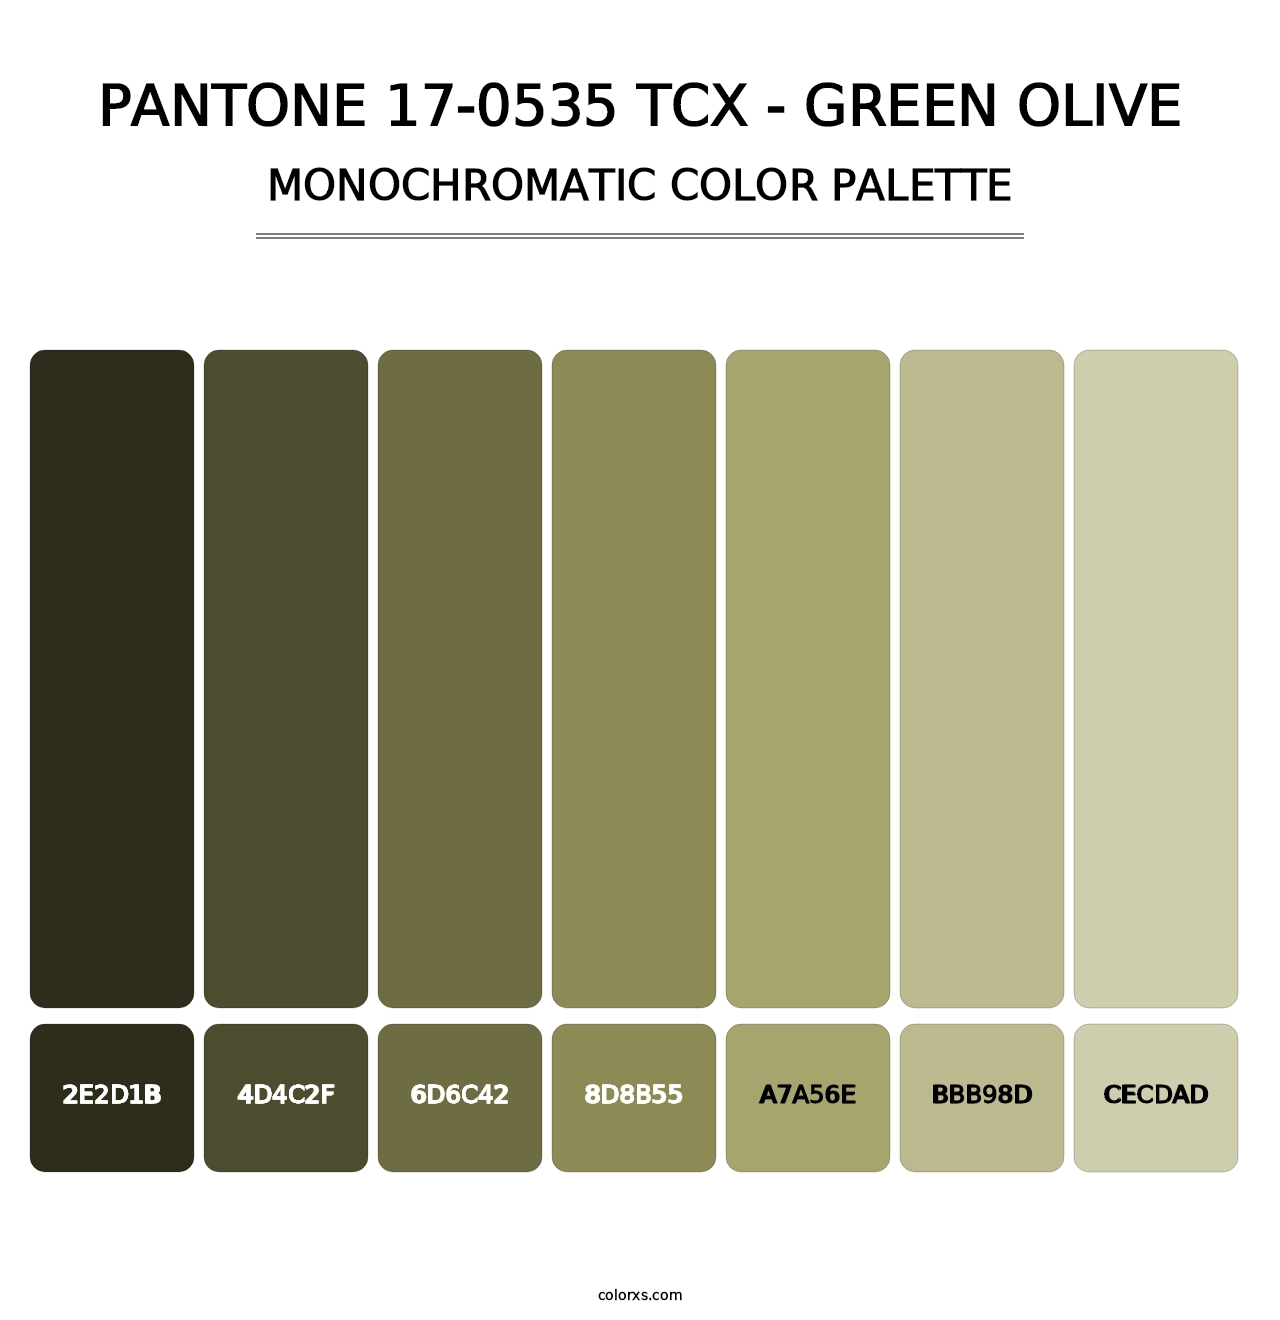 PANTONE 17-0535 TCX - Green Olive - Monochromatic Color Palette